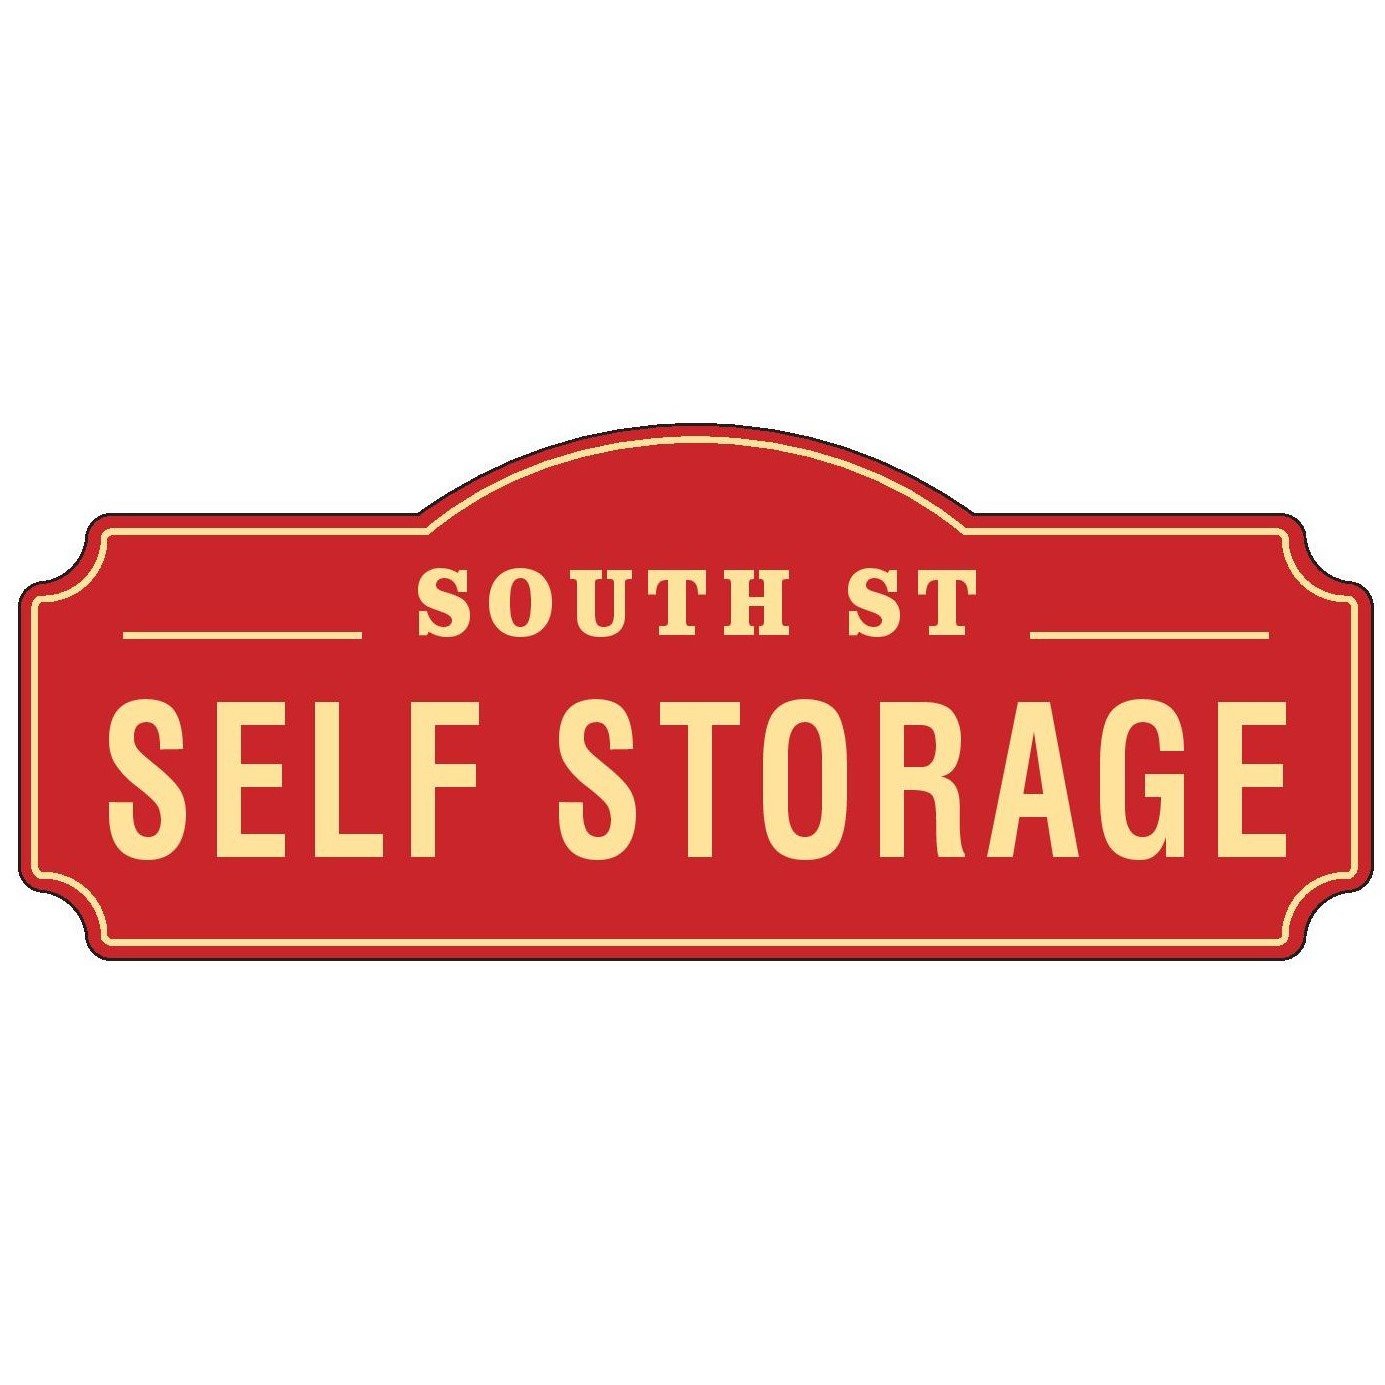 South Street Self Storage - Danbury, CT 06810 - (203)744-1800 | ShowMeLocal.com